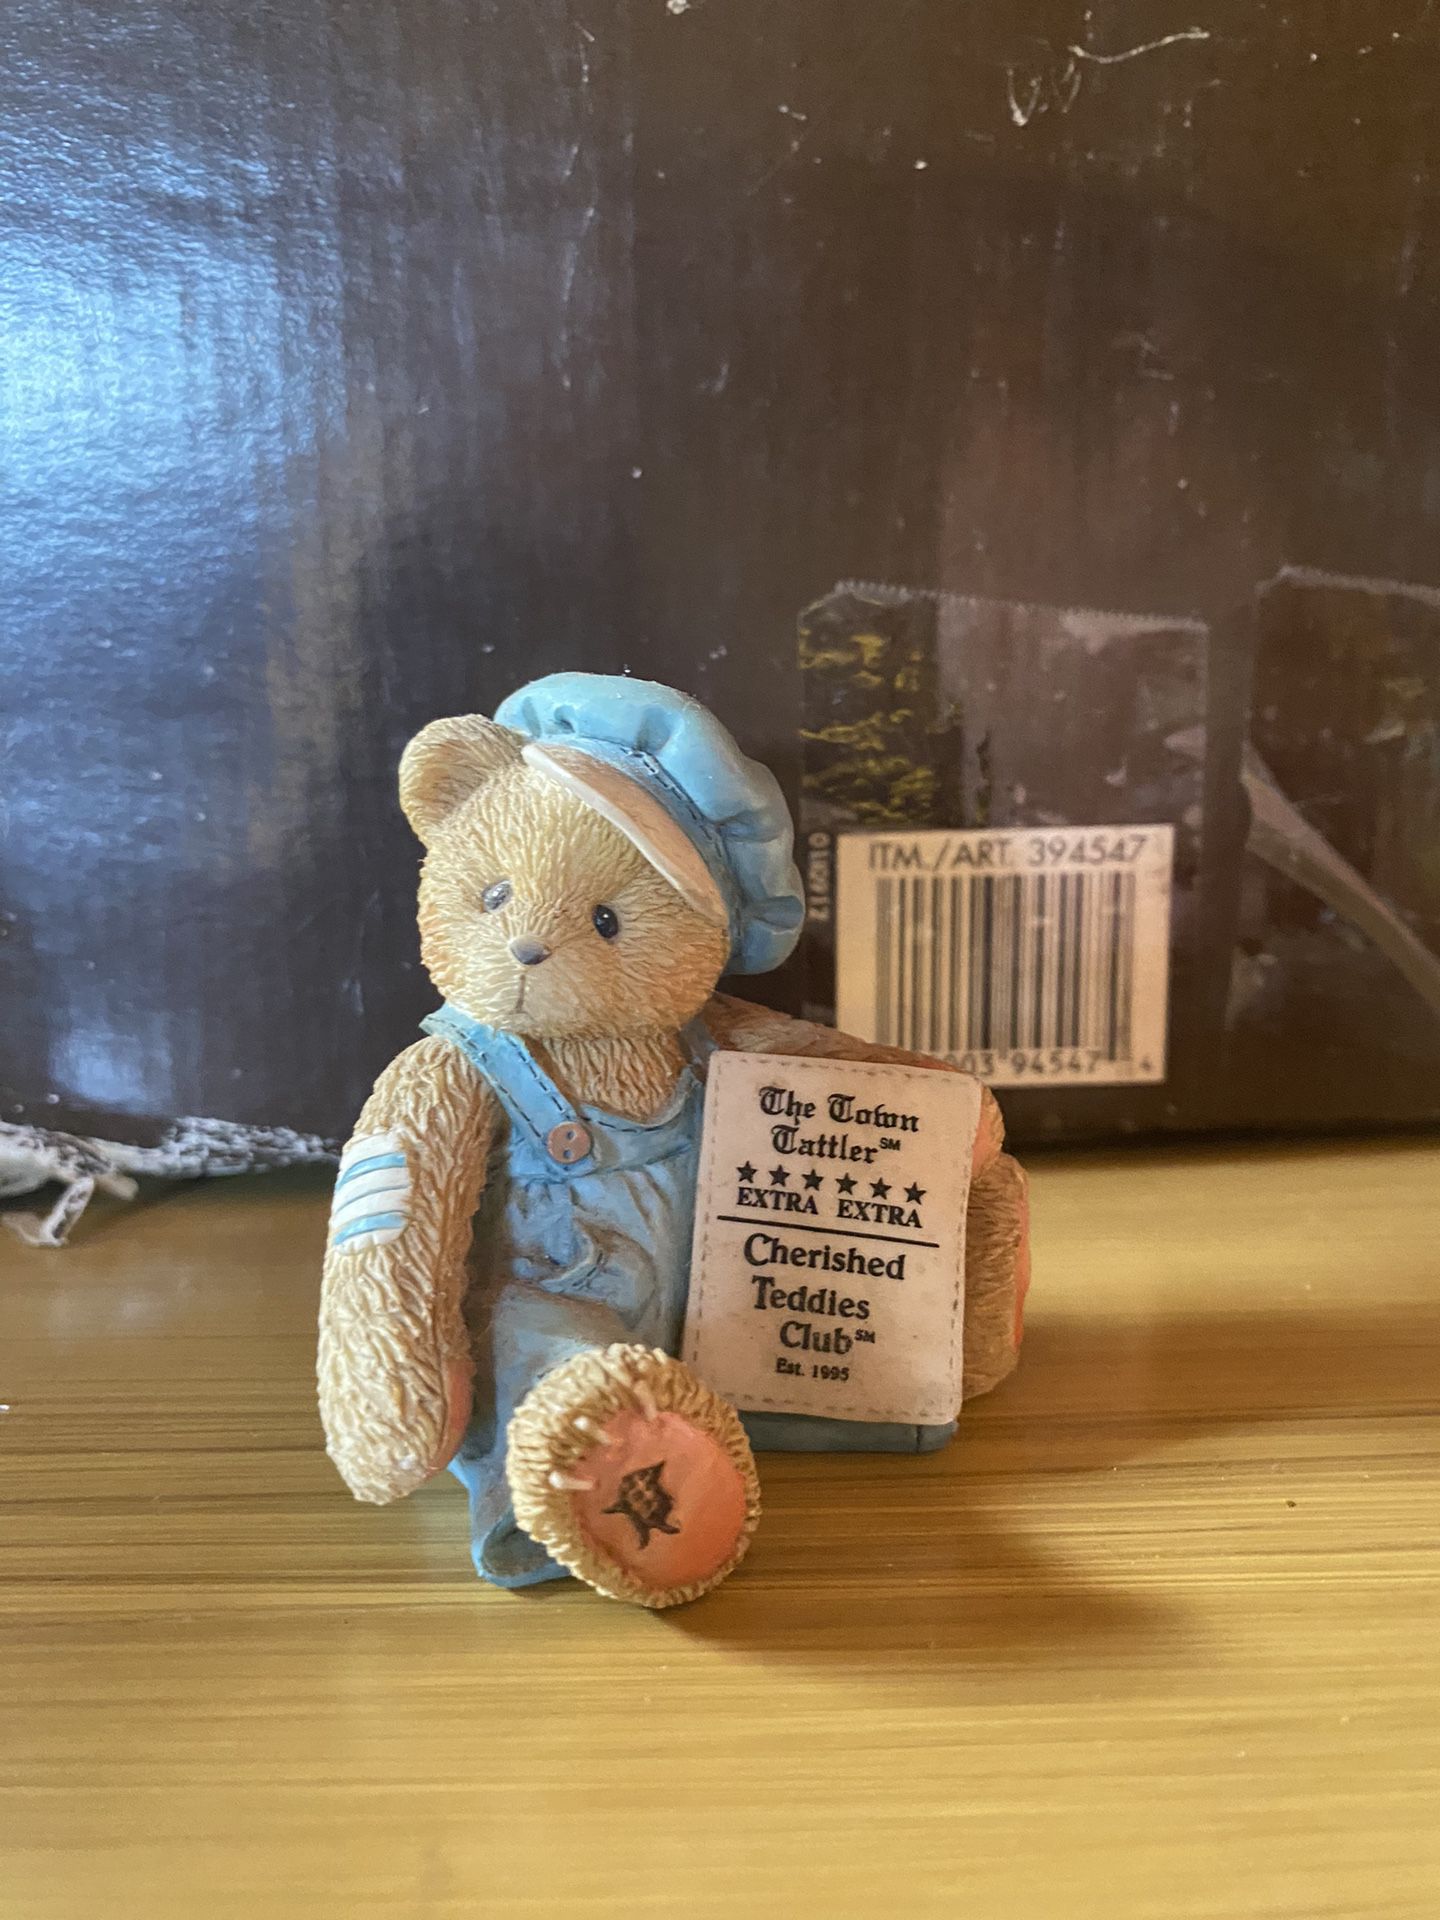 Cherished Teddies Cub E. Bear Charter Club Member Figurine 1995 CT001 Vintage